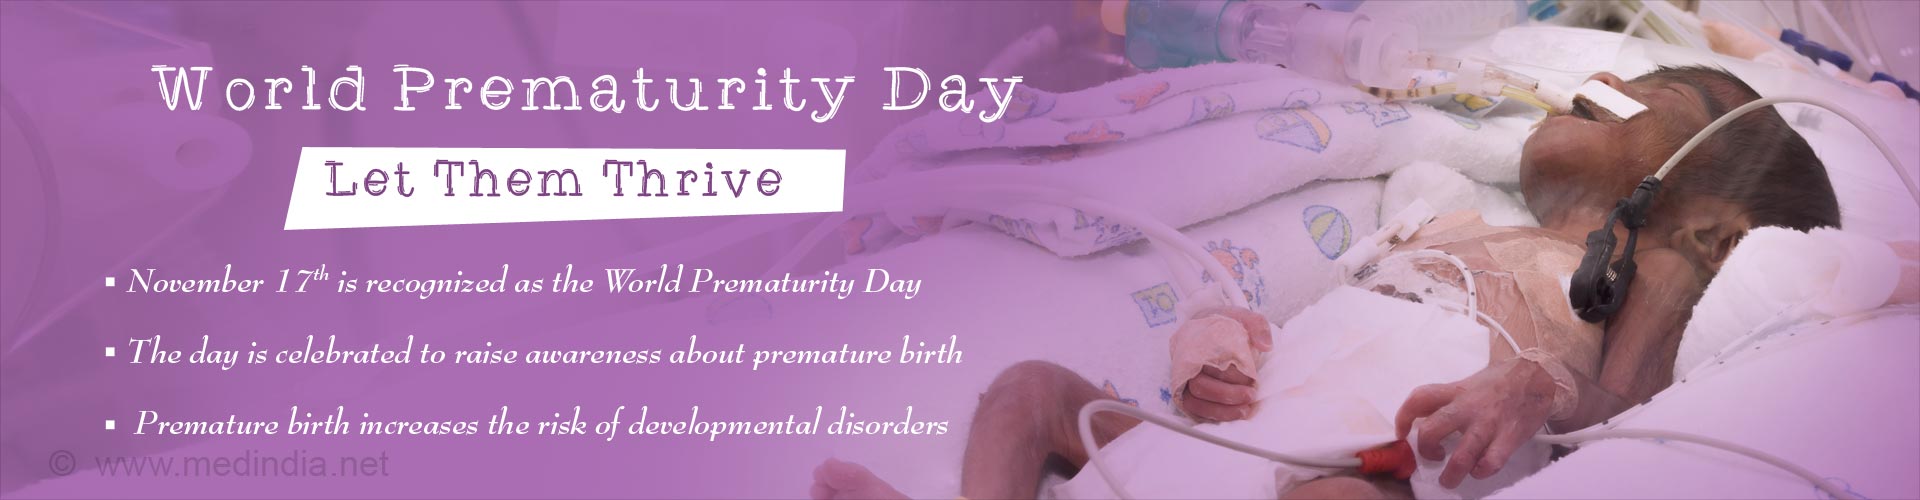 World Prematurity Day Let Them Thrive